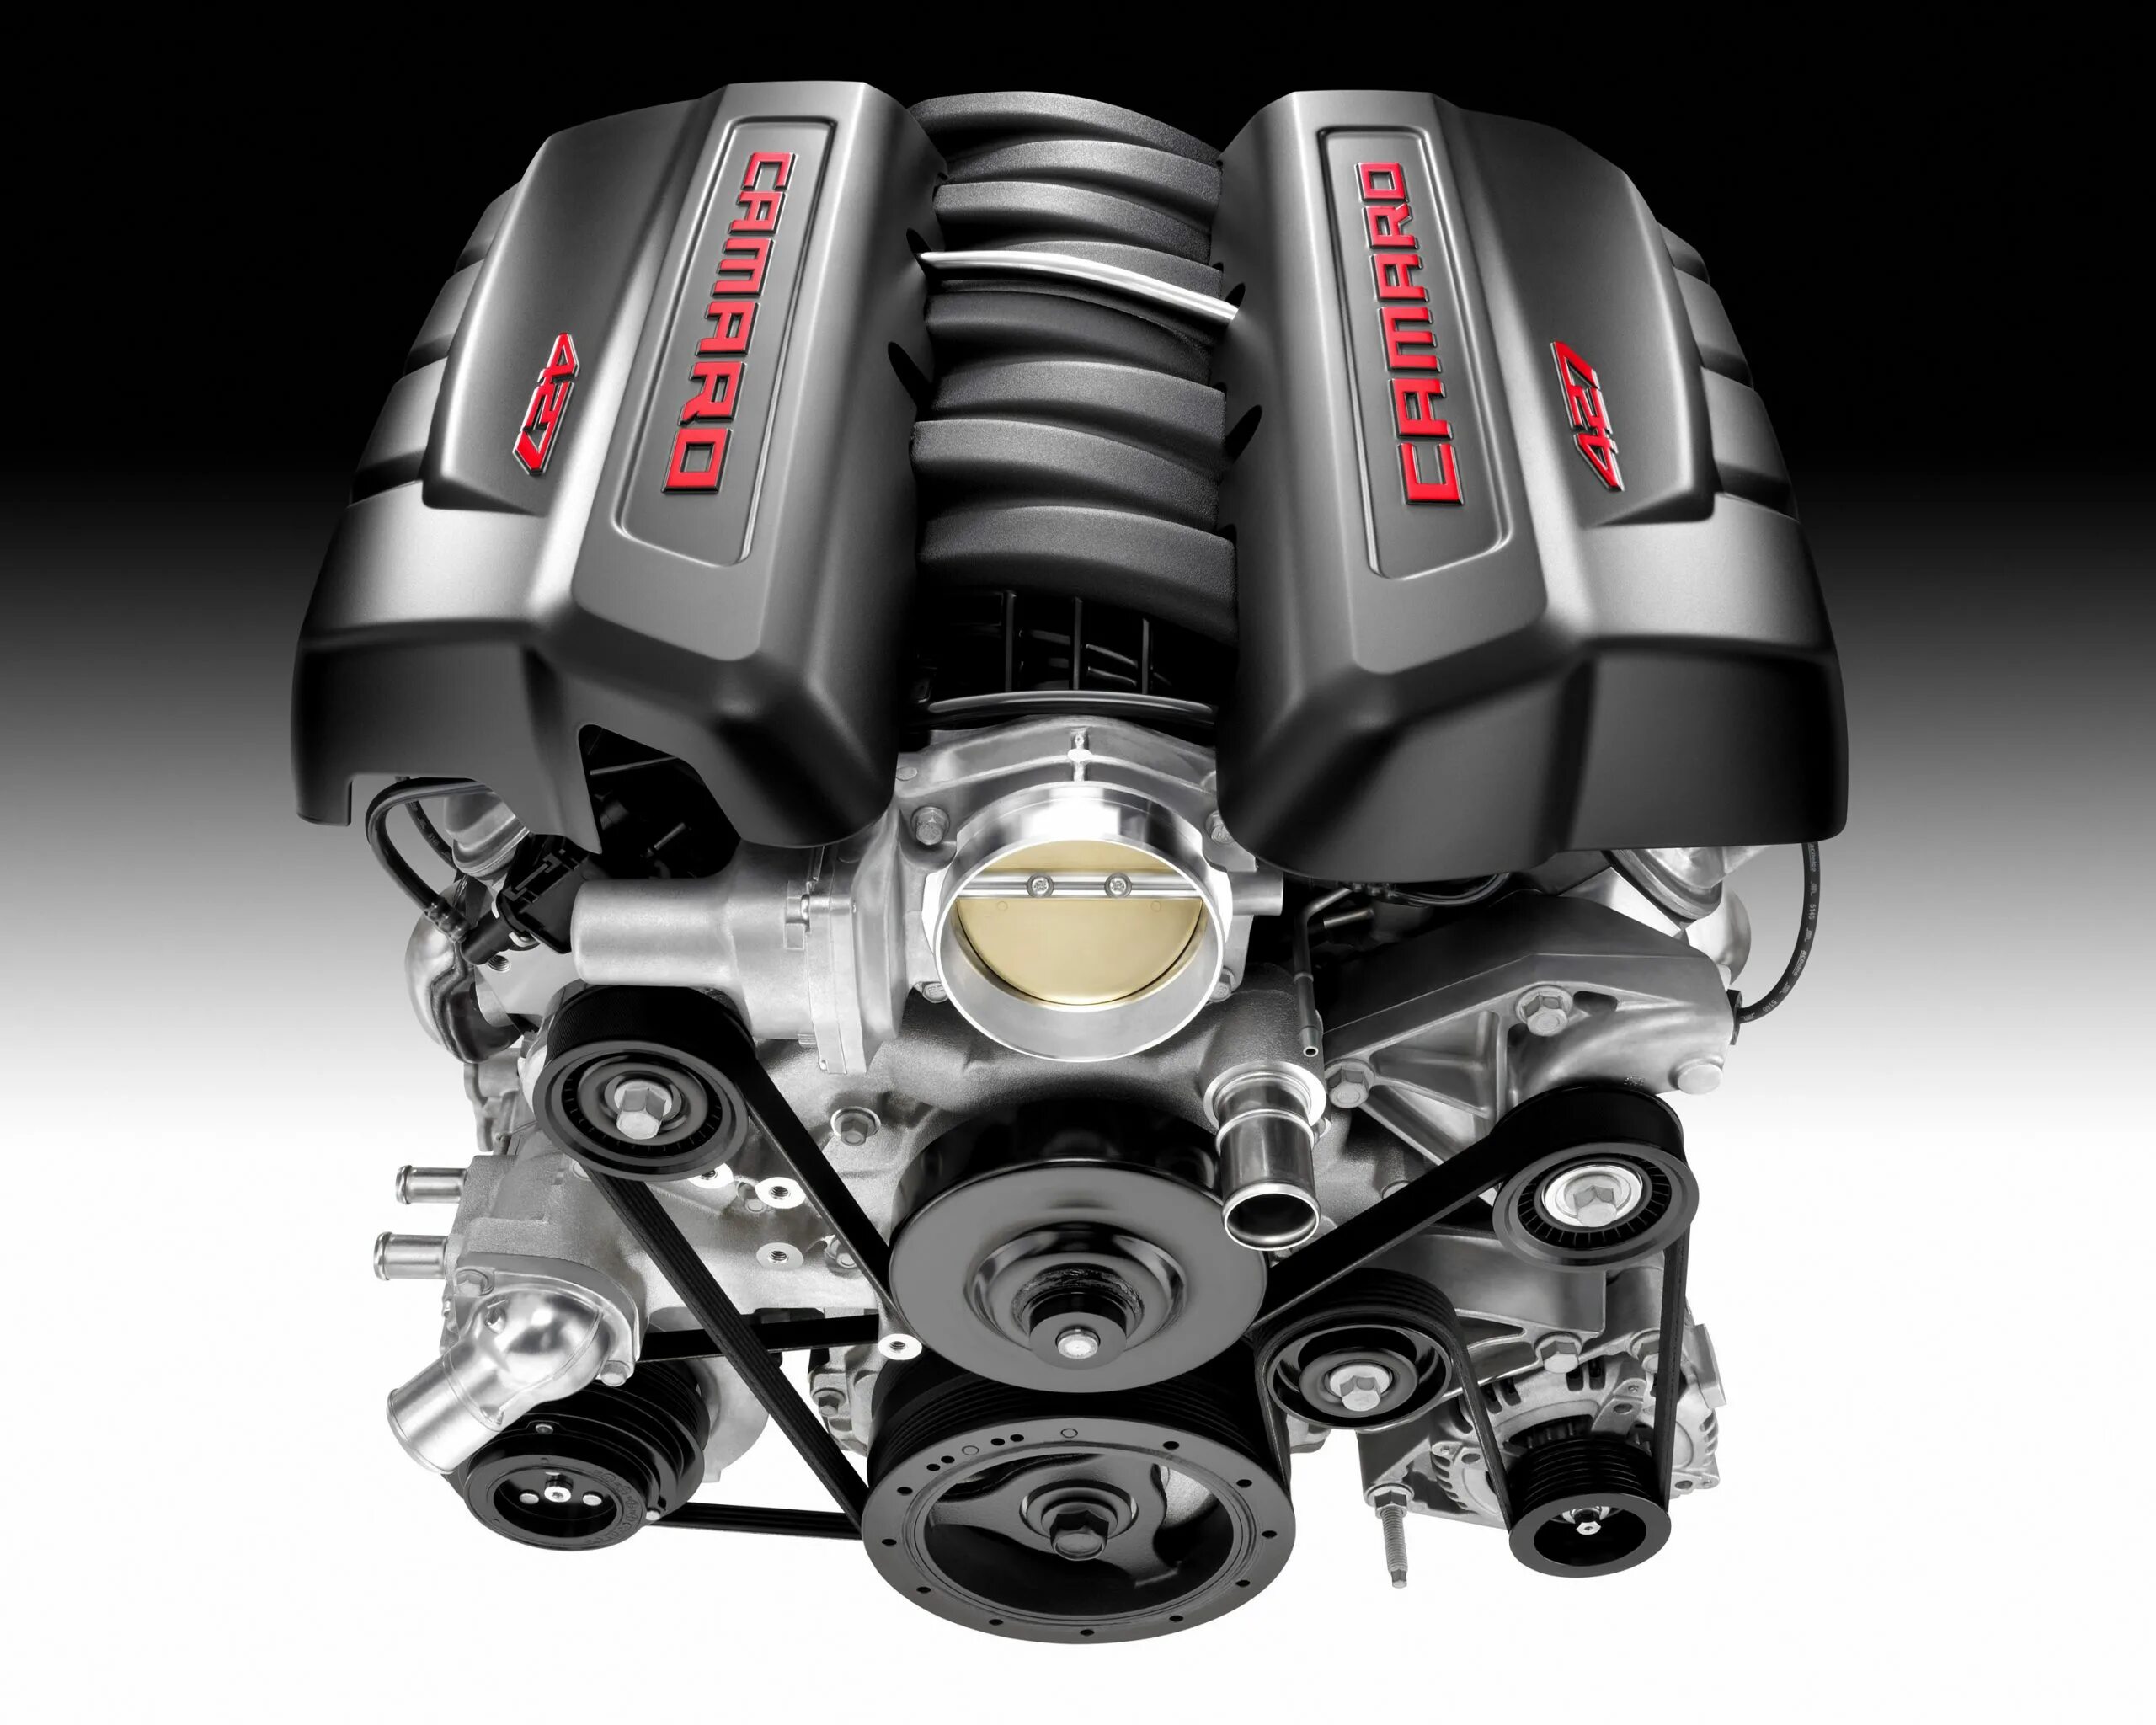 Chevrolet Camaro v8 мотор. Двигатель ls7 v8. Двигатель Шевроле в8. Камаро 6.2 v8. Купить мотор на авто